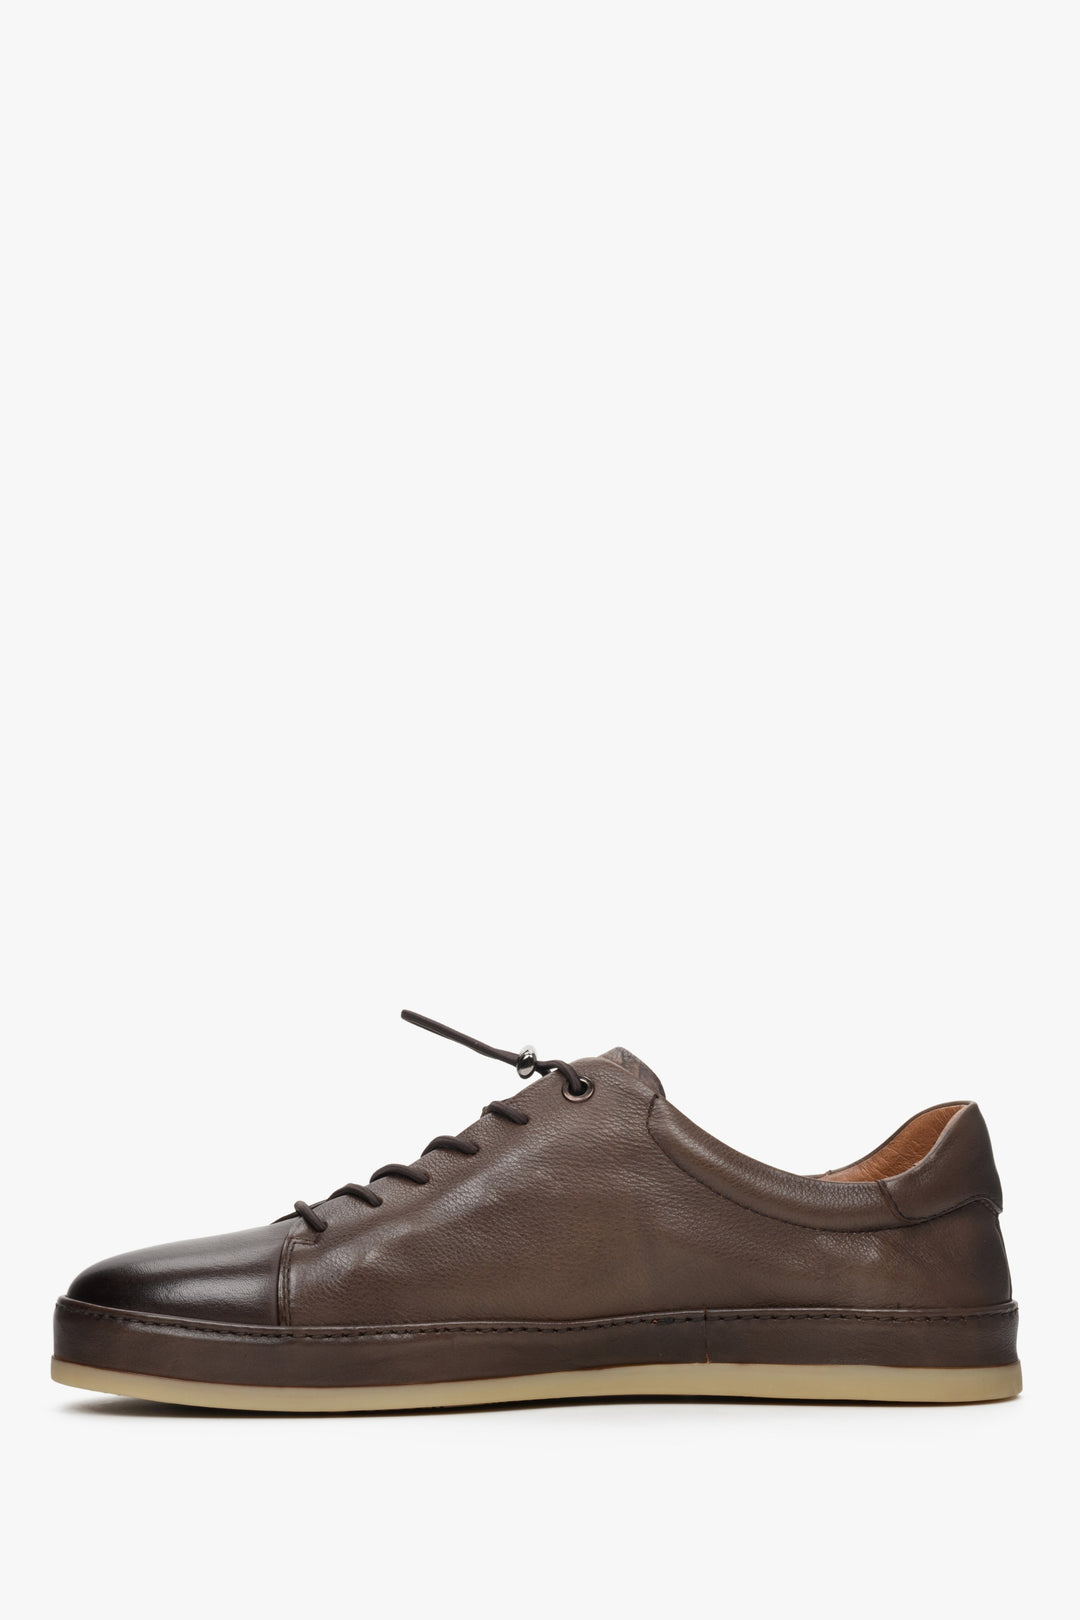 Men's Estro brown leather sneakers for spring/fall - shoe profile presentation.